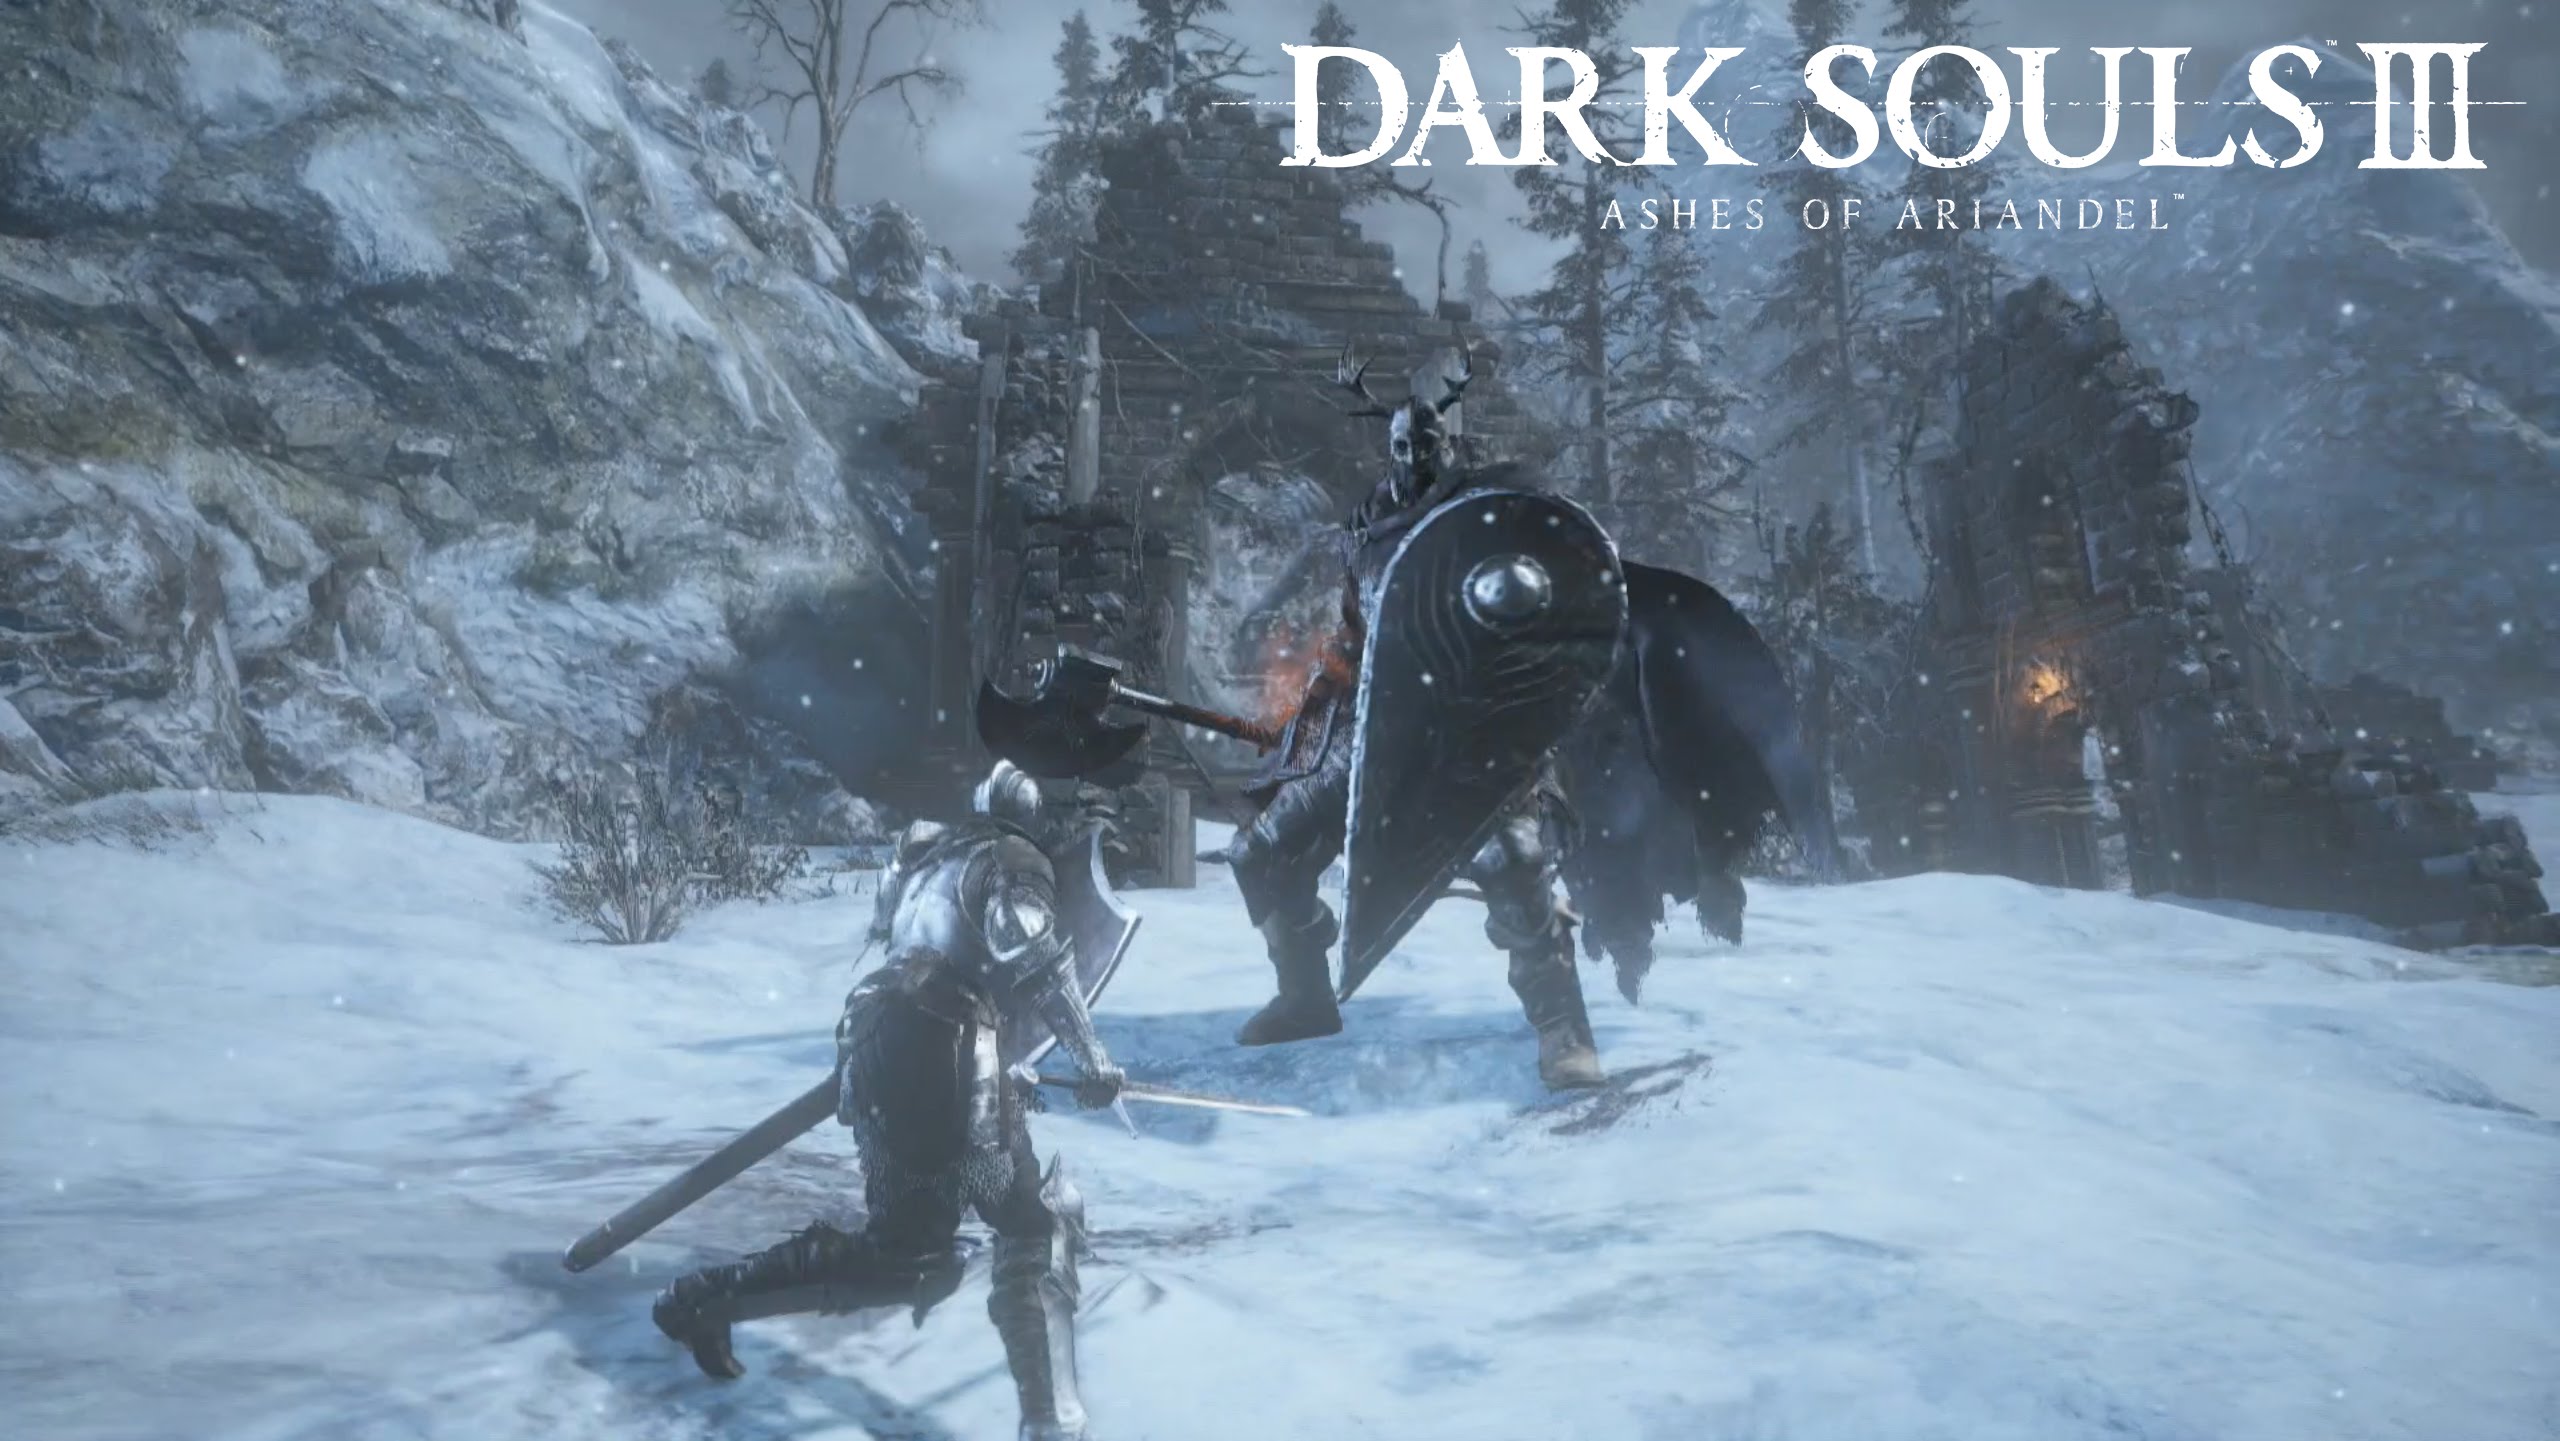 Dark Souls III - Ashes of Ariandel DLC Gameplay Trailer